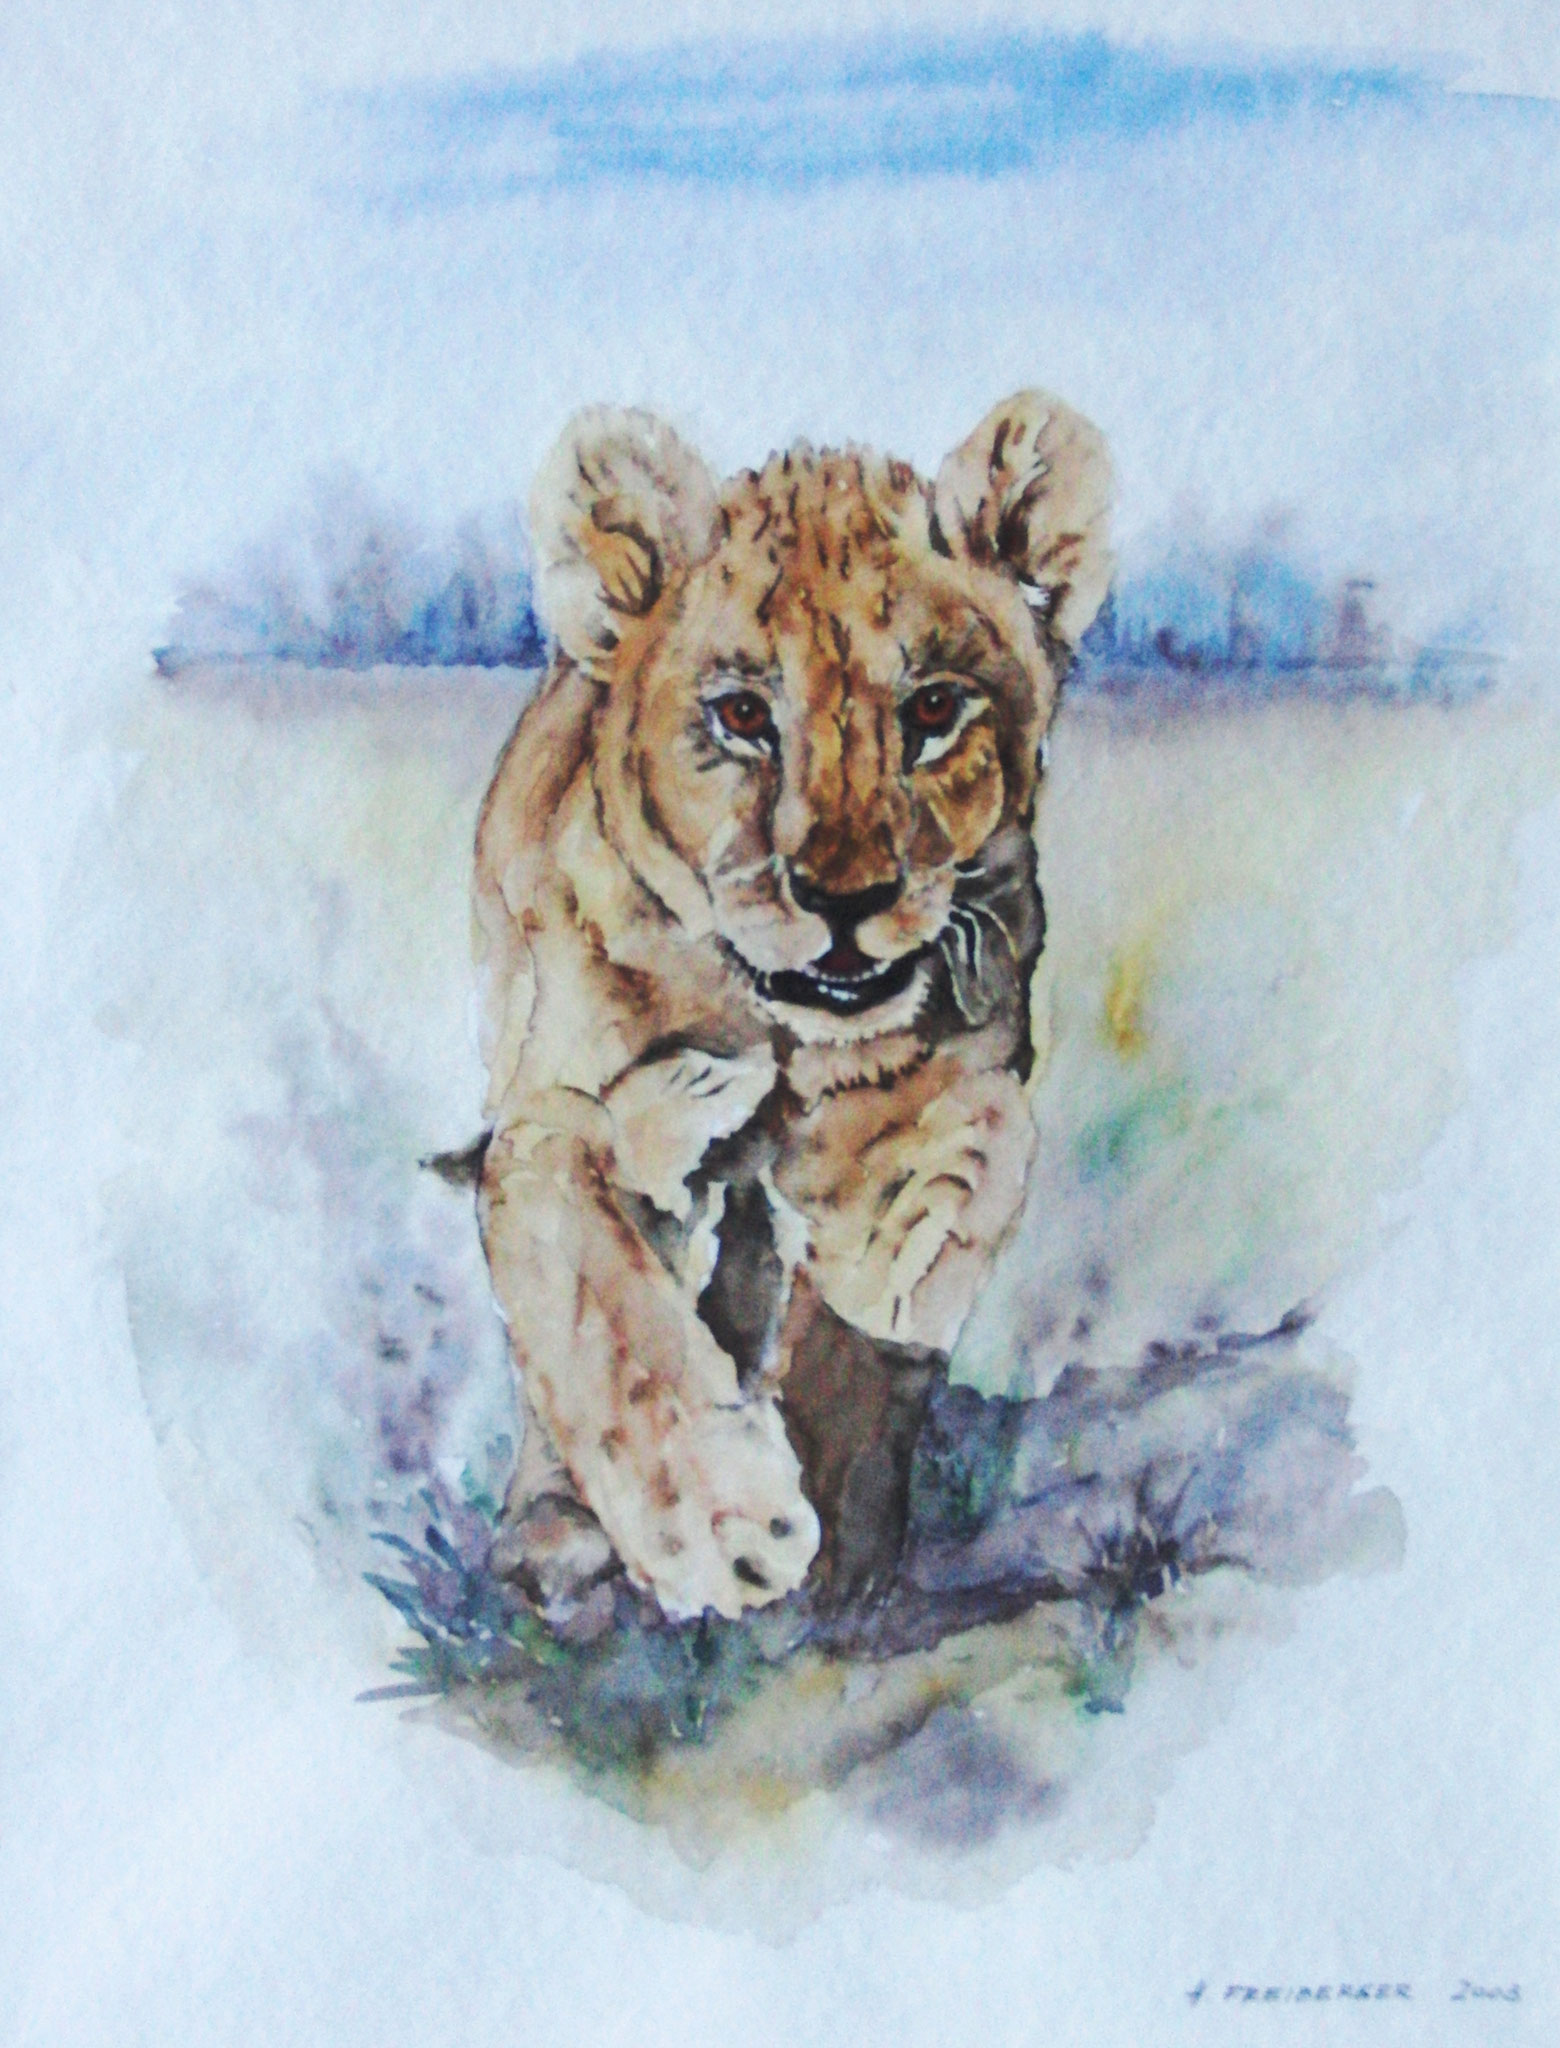 ART HFrei- "Tiger" - Aquarell - 2003